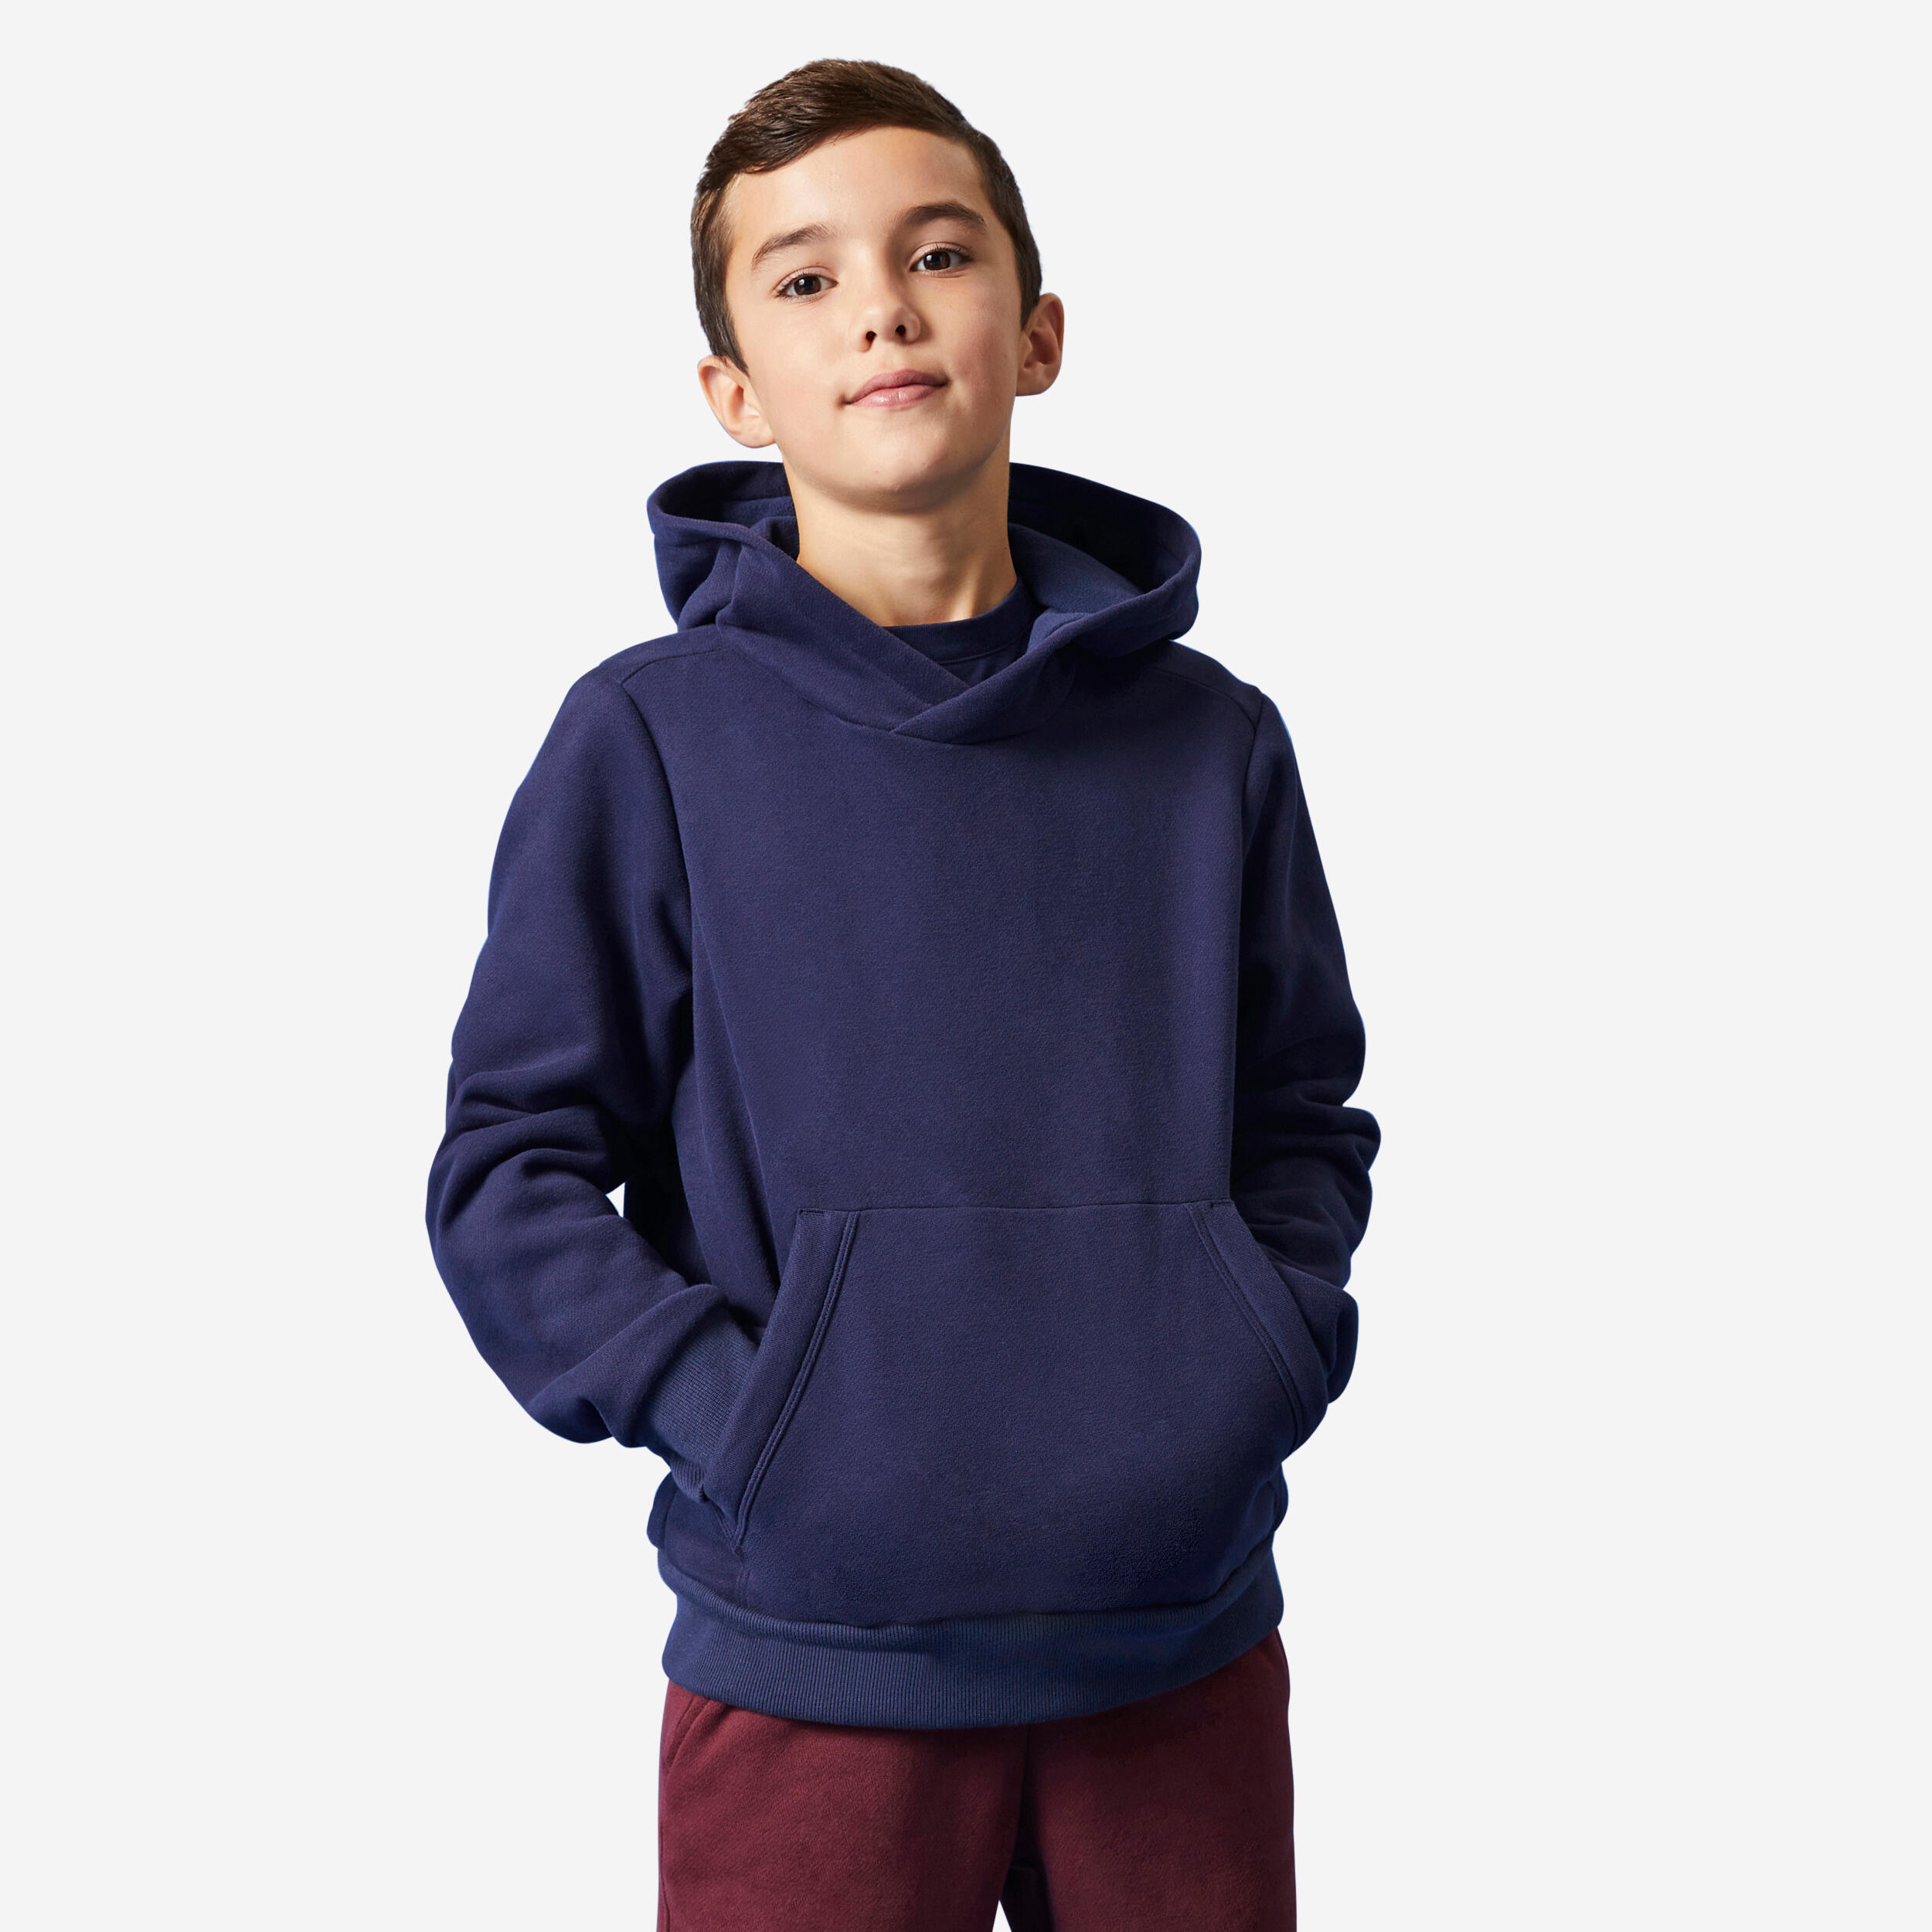 DOMYOS Kids' Cotton Hooded Sweatshirt - Navy